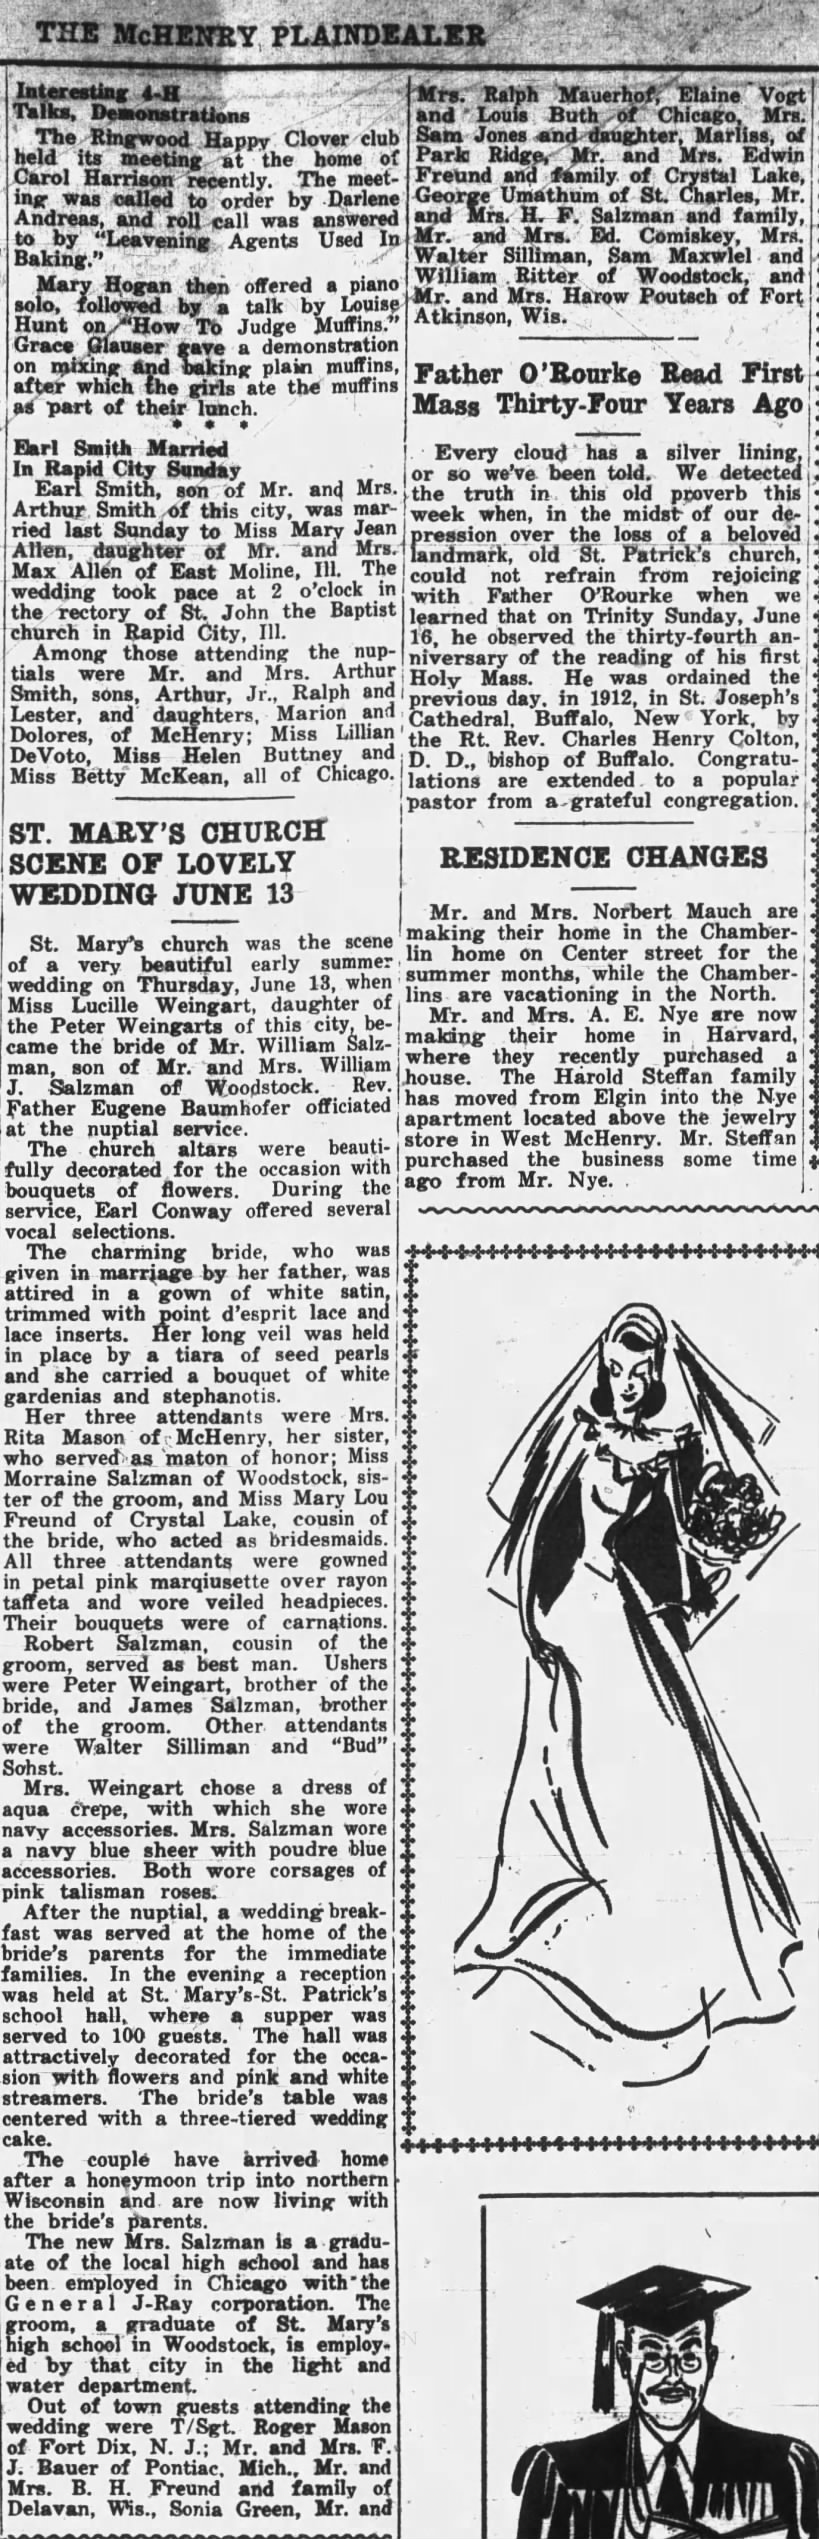 Earl Smith-Mary Jean Allen wedding, June 16, 1946.